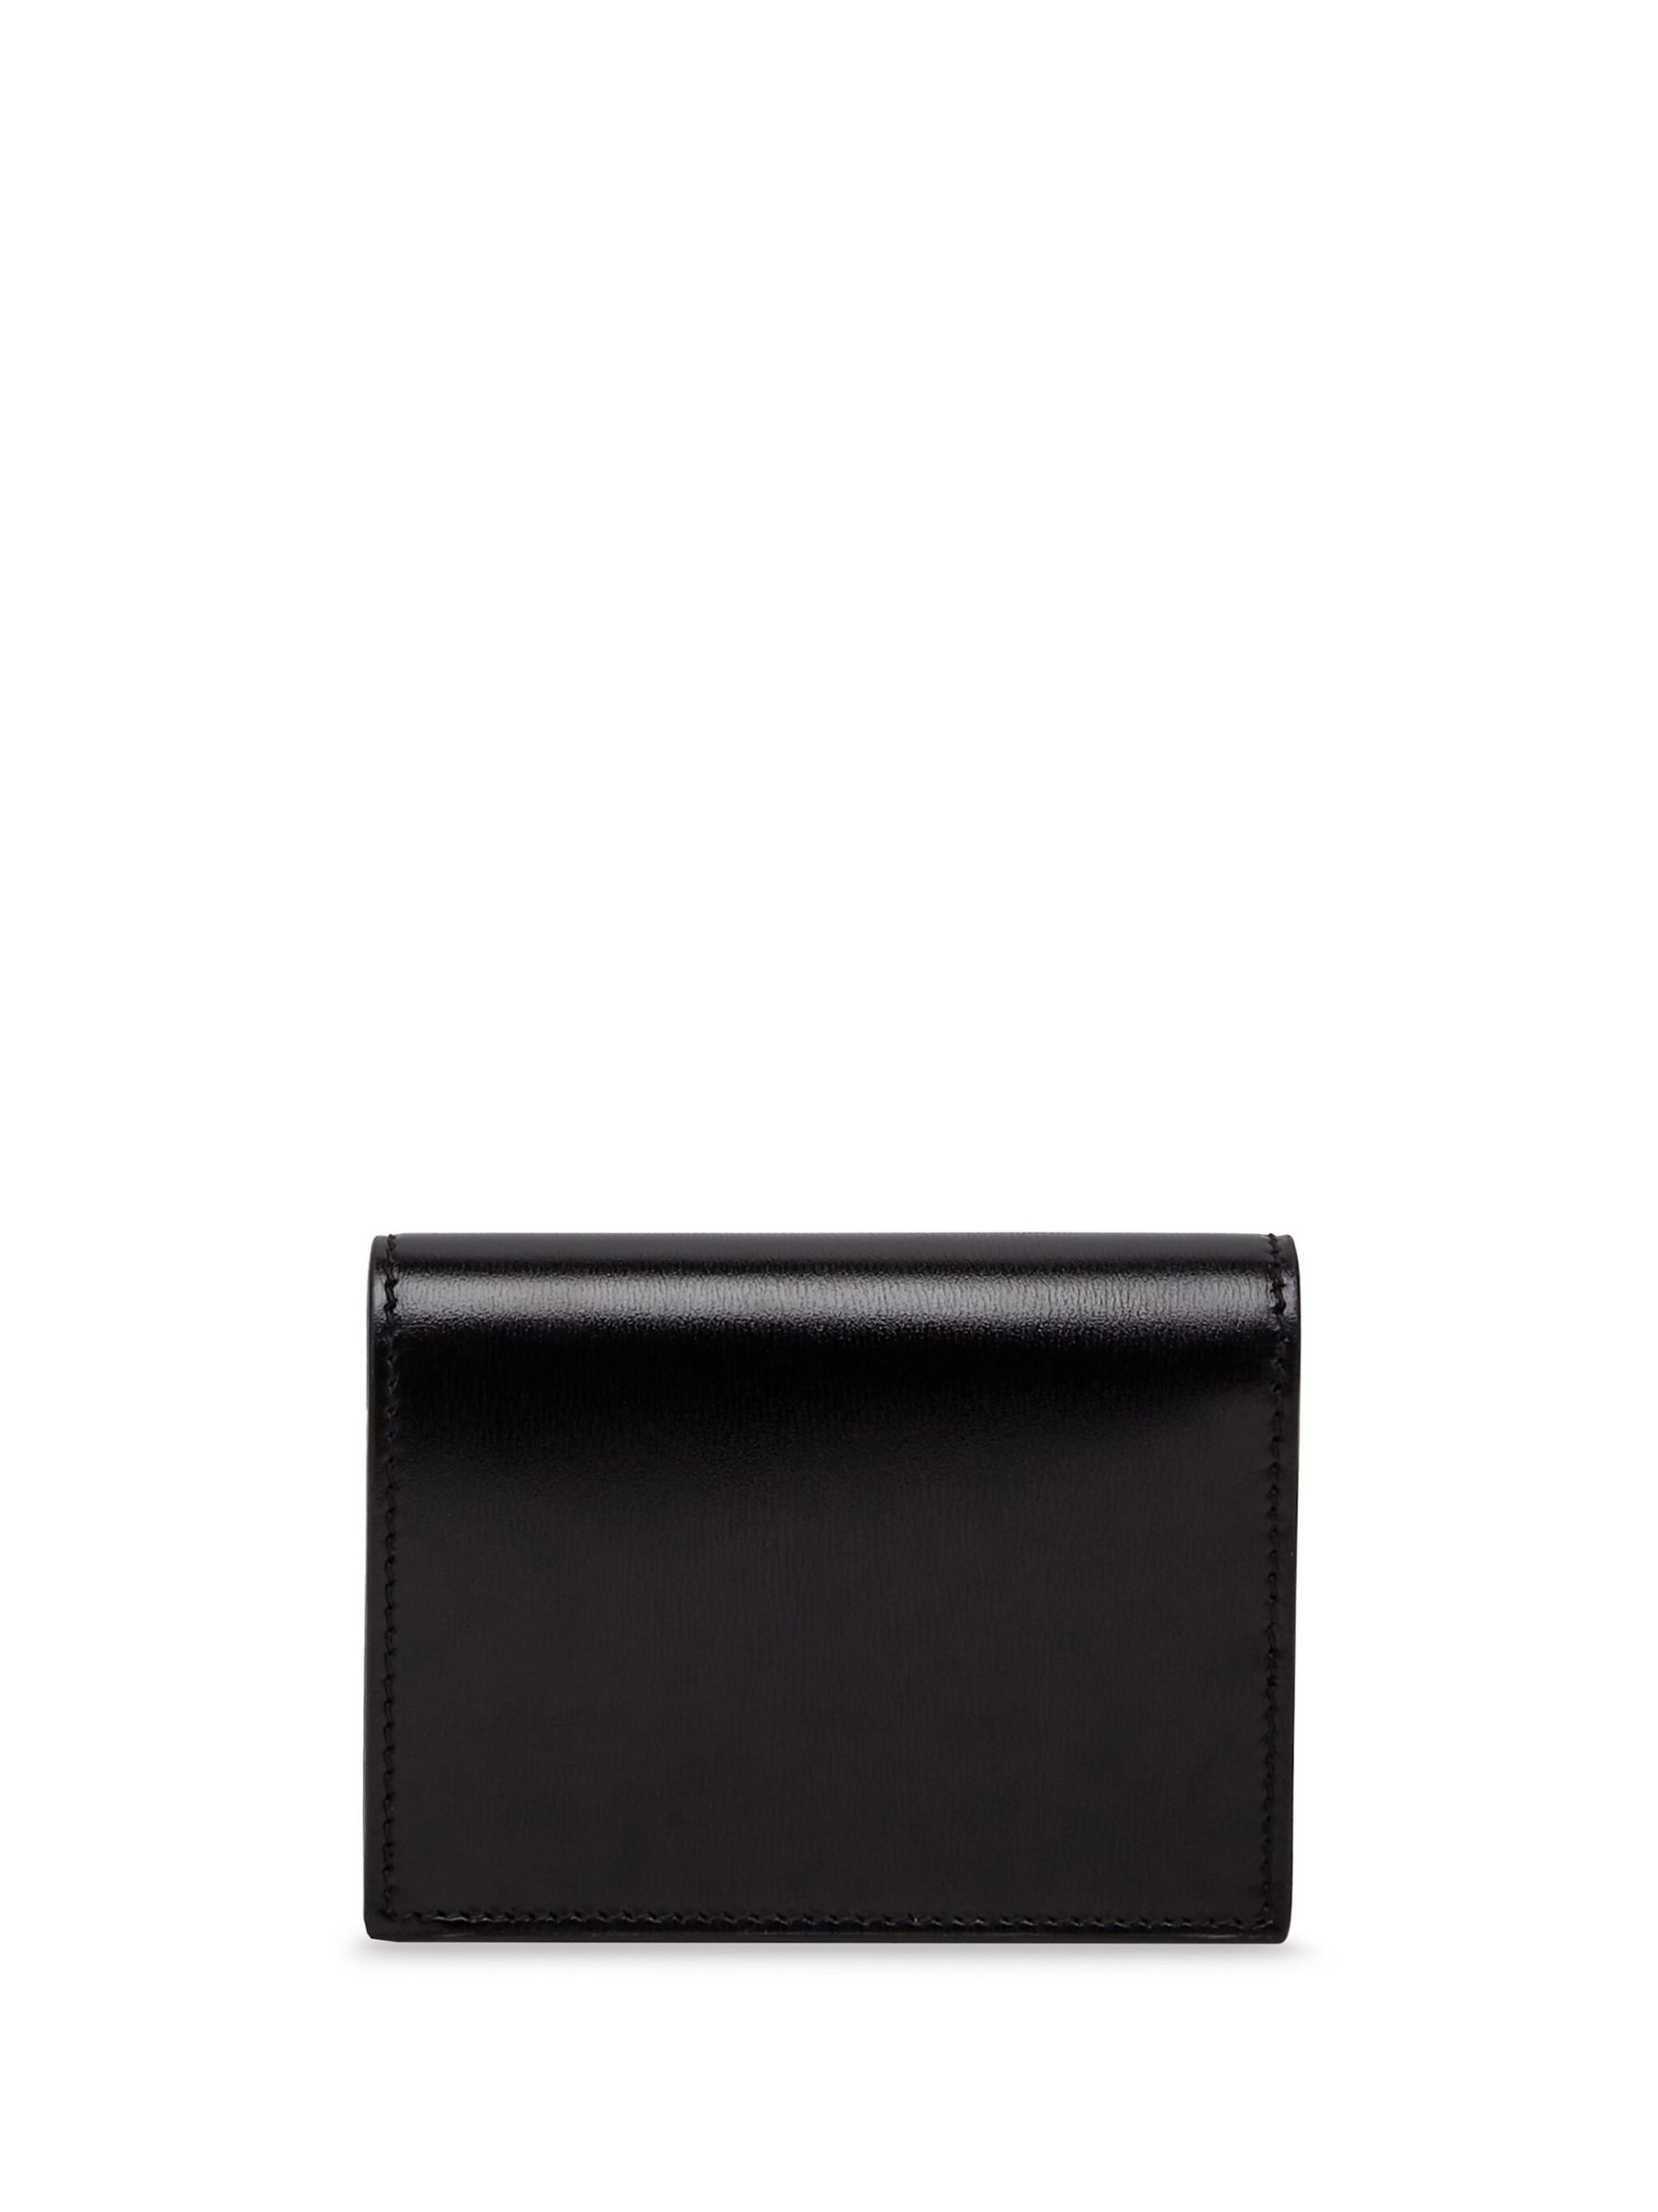 Black Gancini Leather Wallet - 2